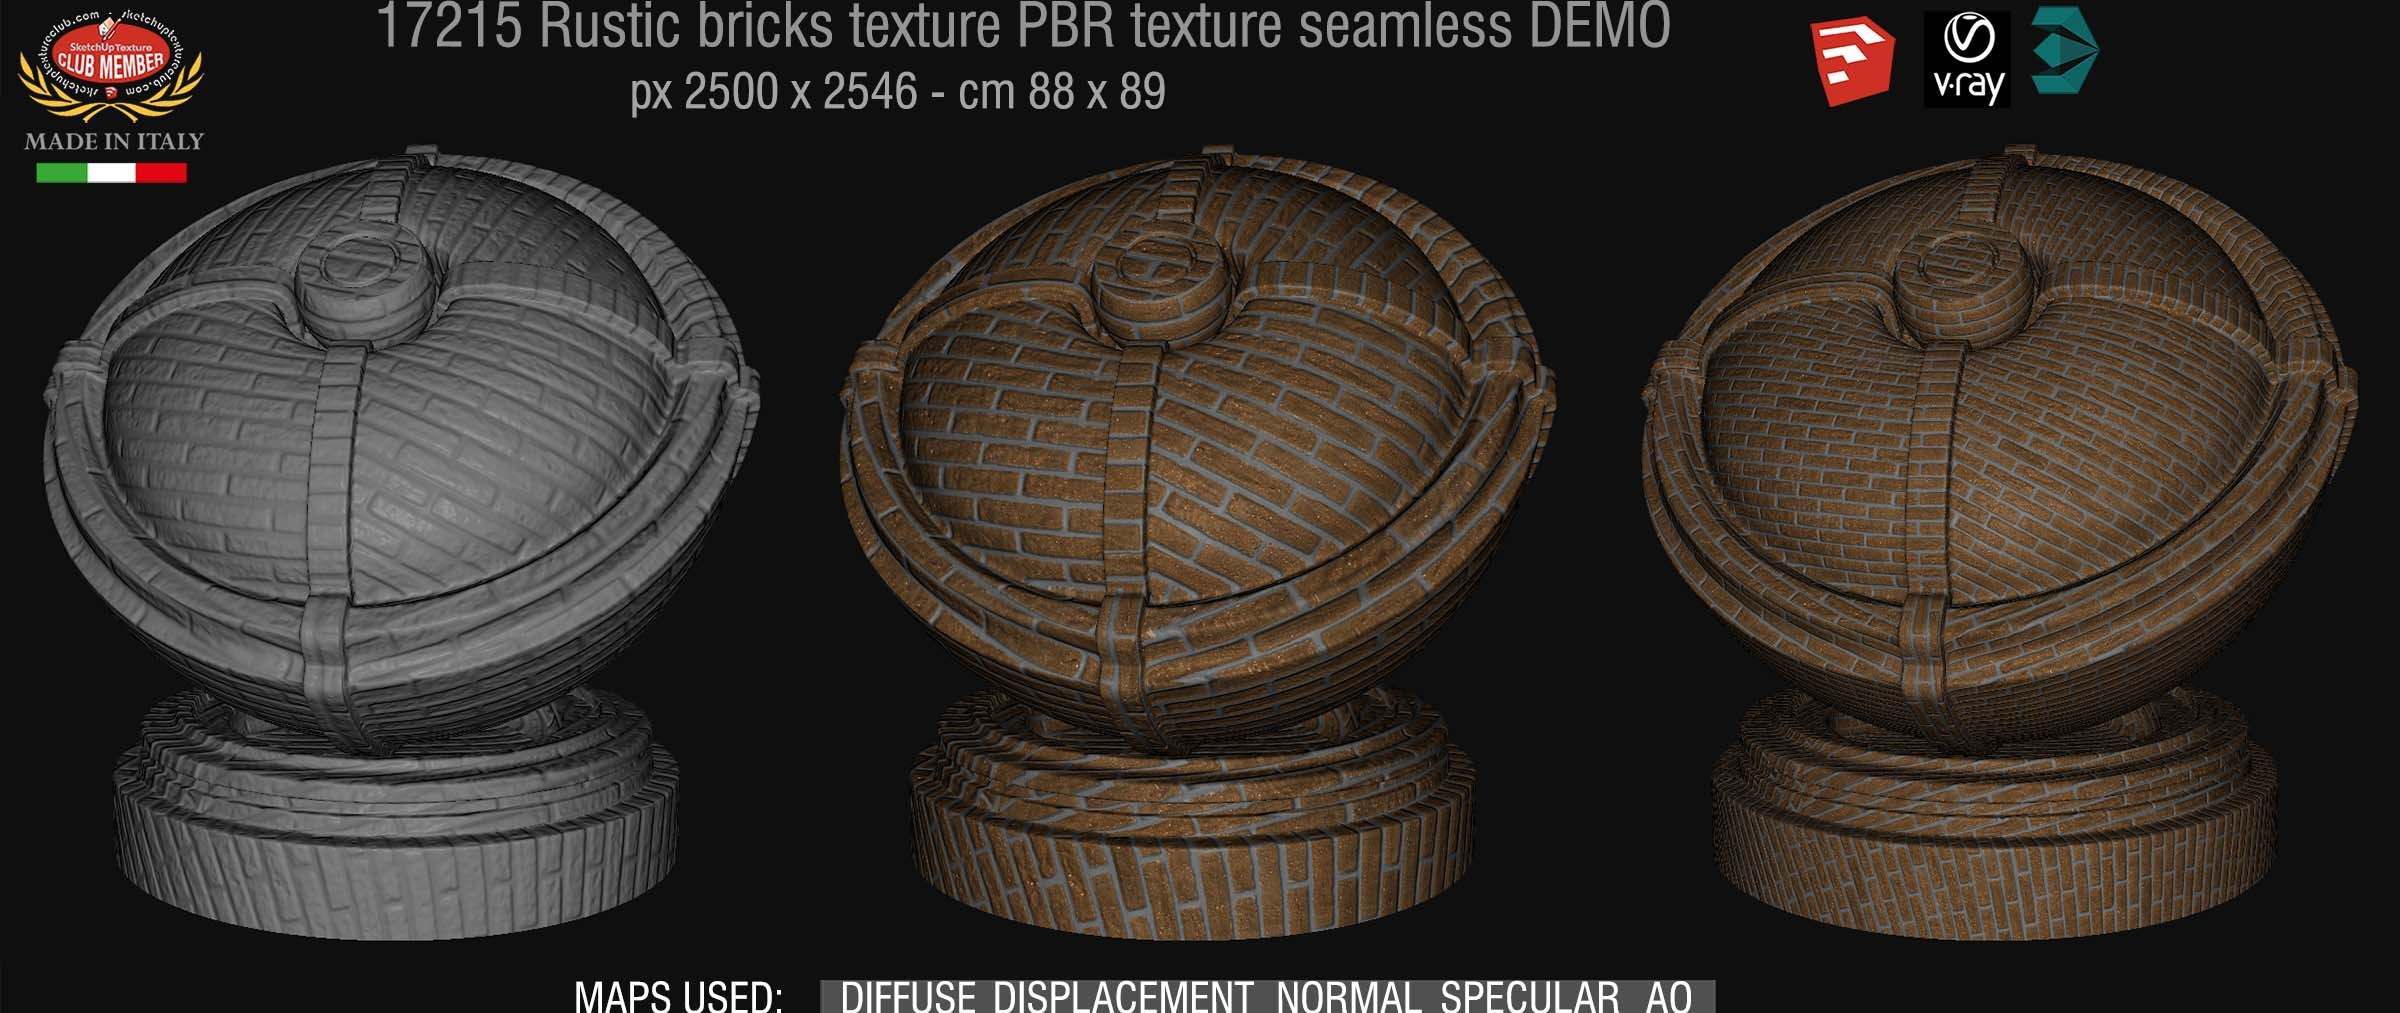 17215 Rustic bricks PBR texture seamless DEMO